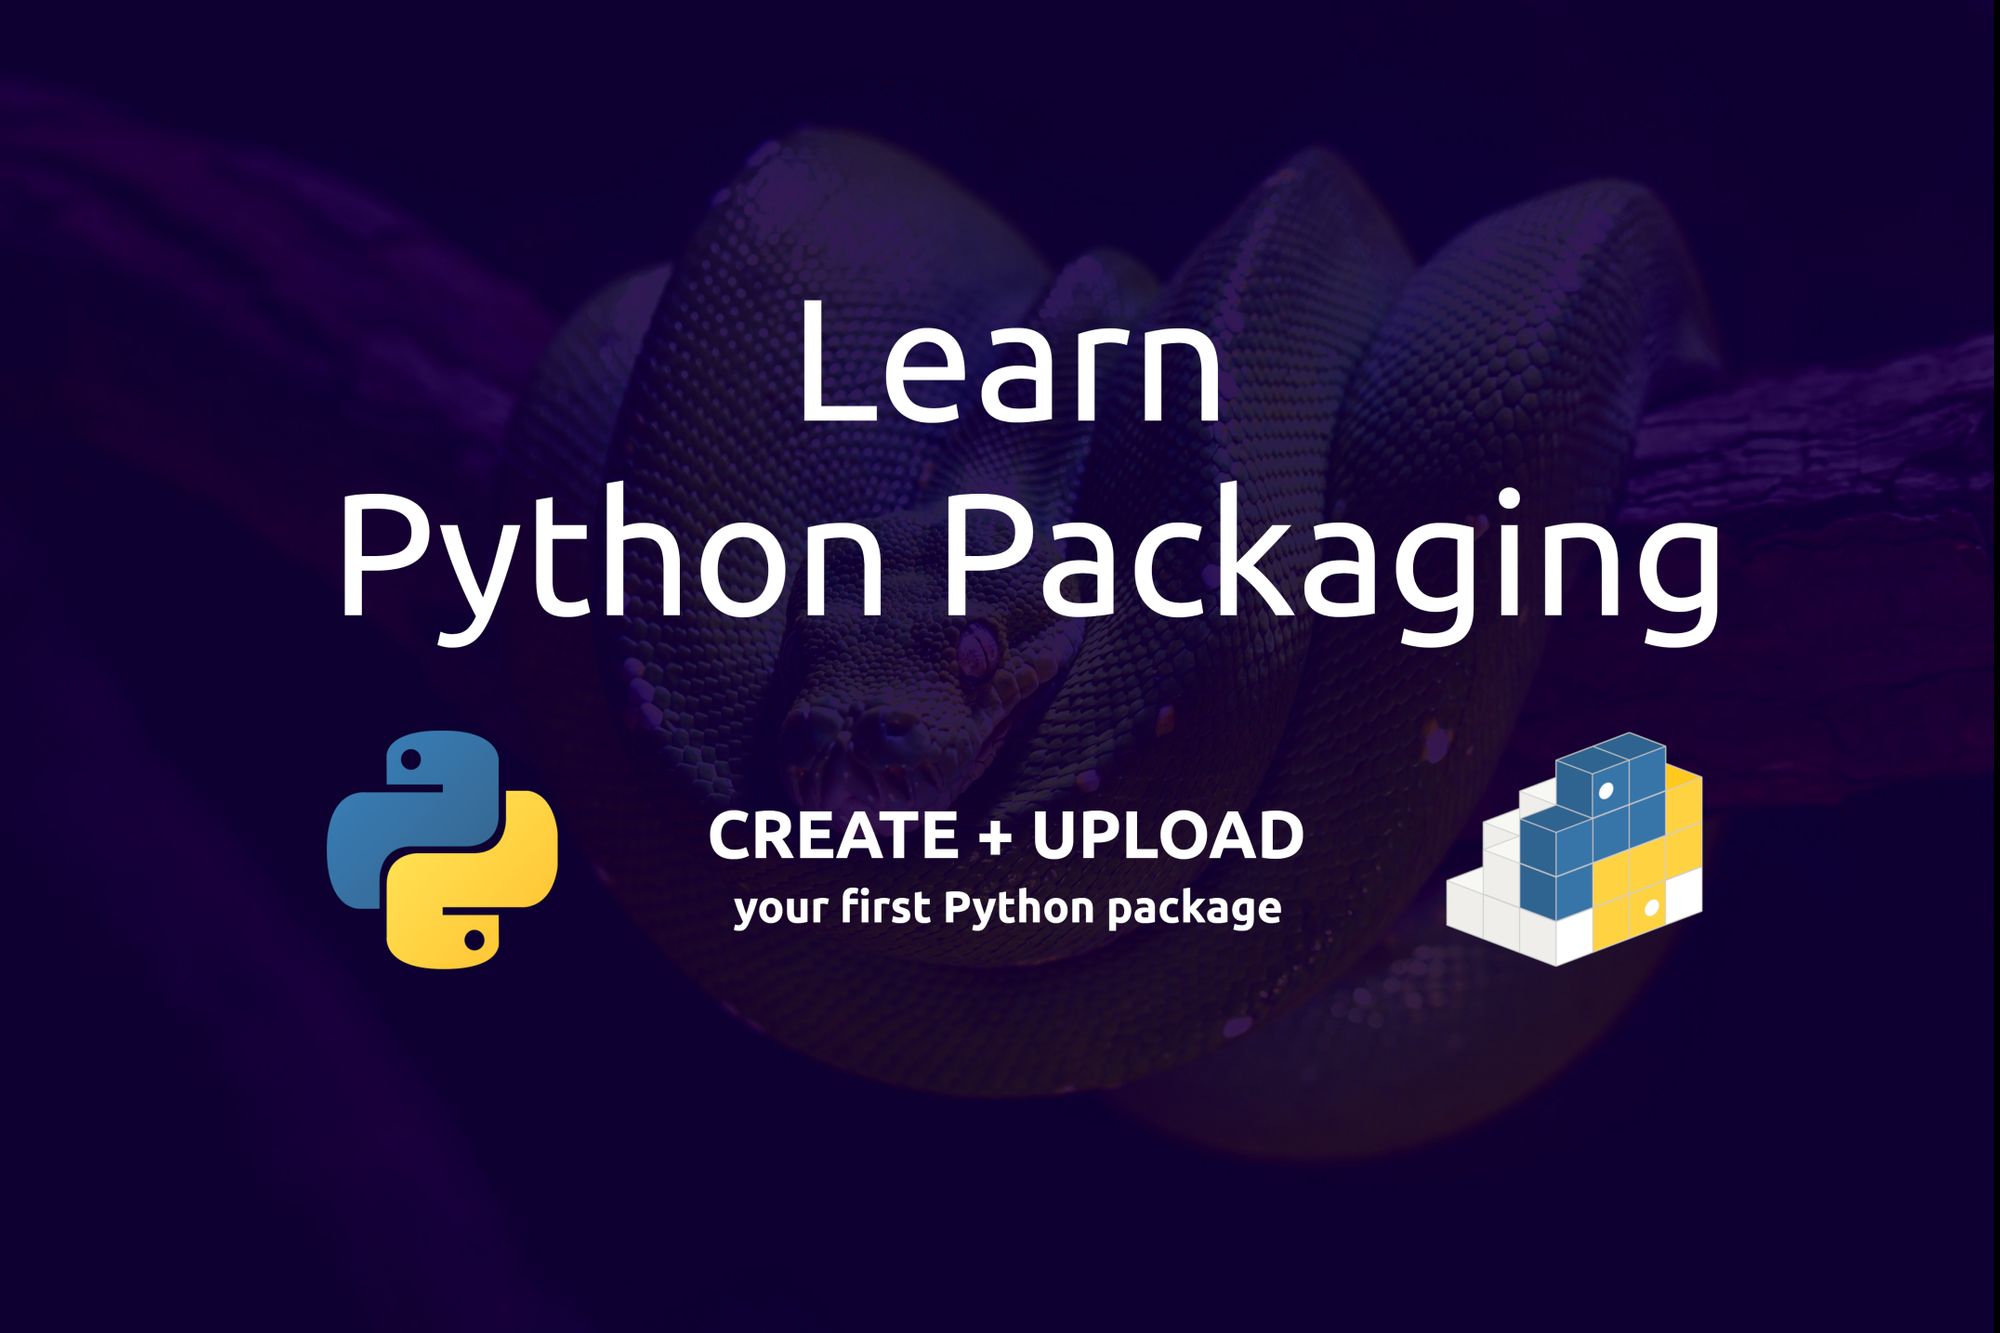 Python new line. Пакет Python. Python creator. Python Packaging. Подключение пакетов для Python.